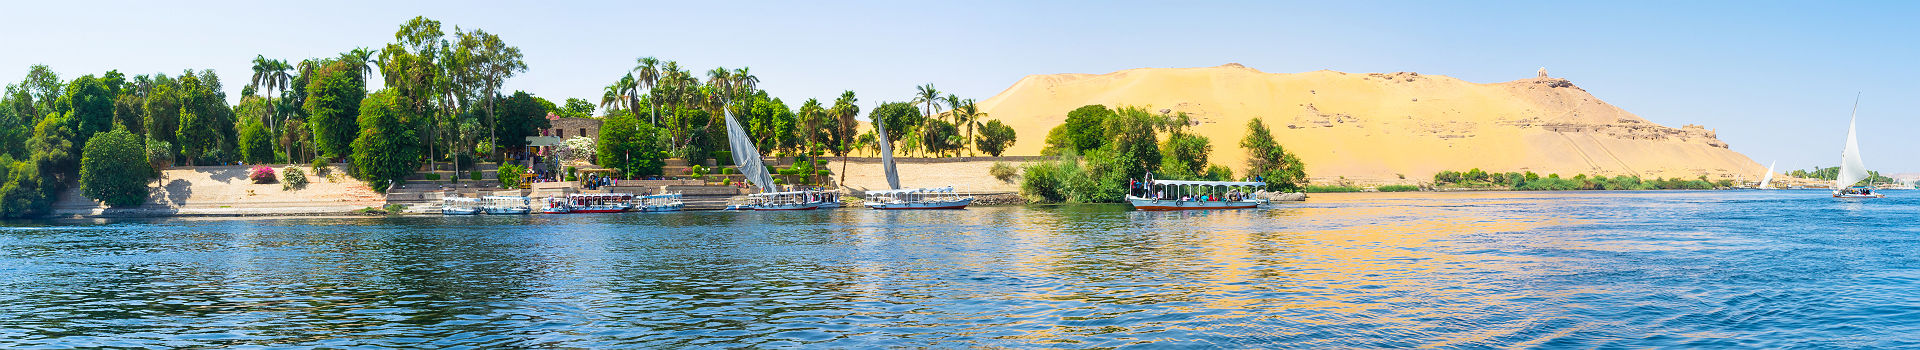 Jardin aux abords du Nil - Egypte